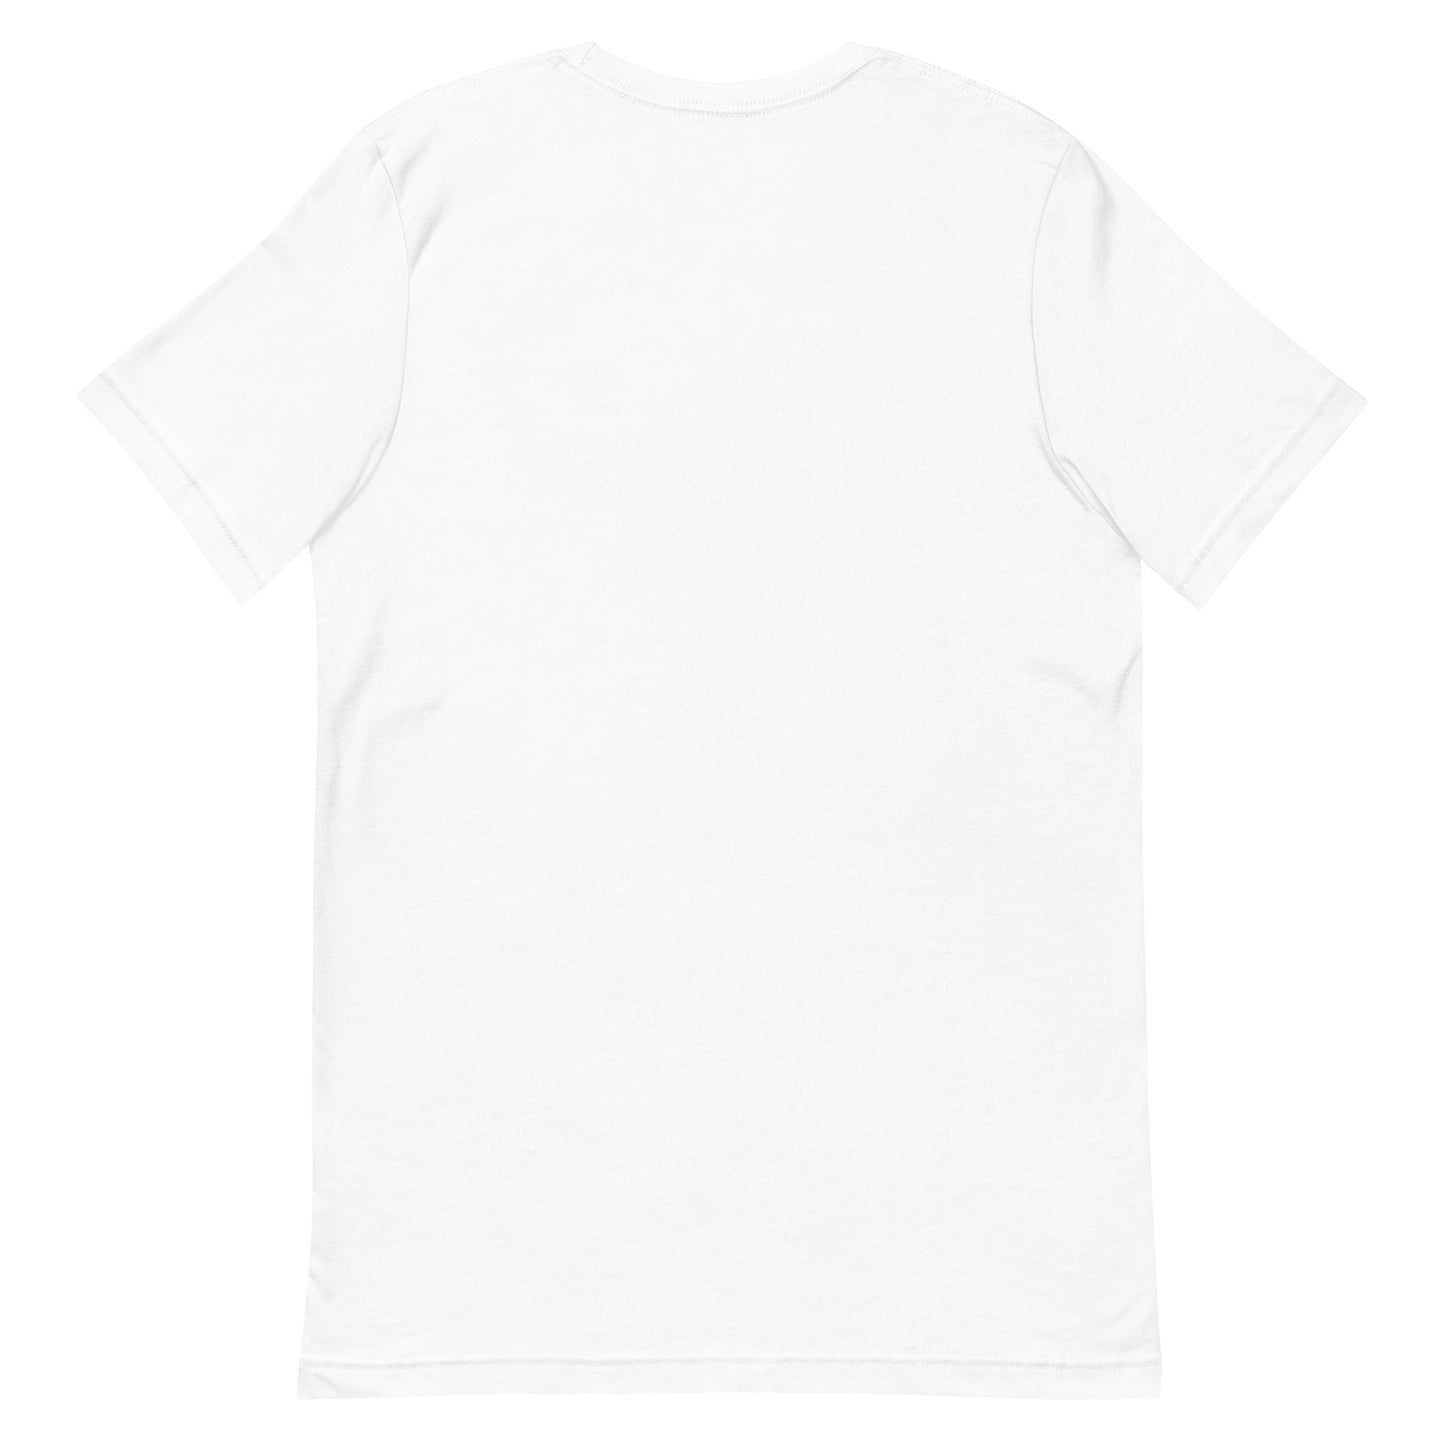 Unisex t-shirt "29 HON KOMAGAKE" White